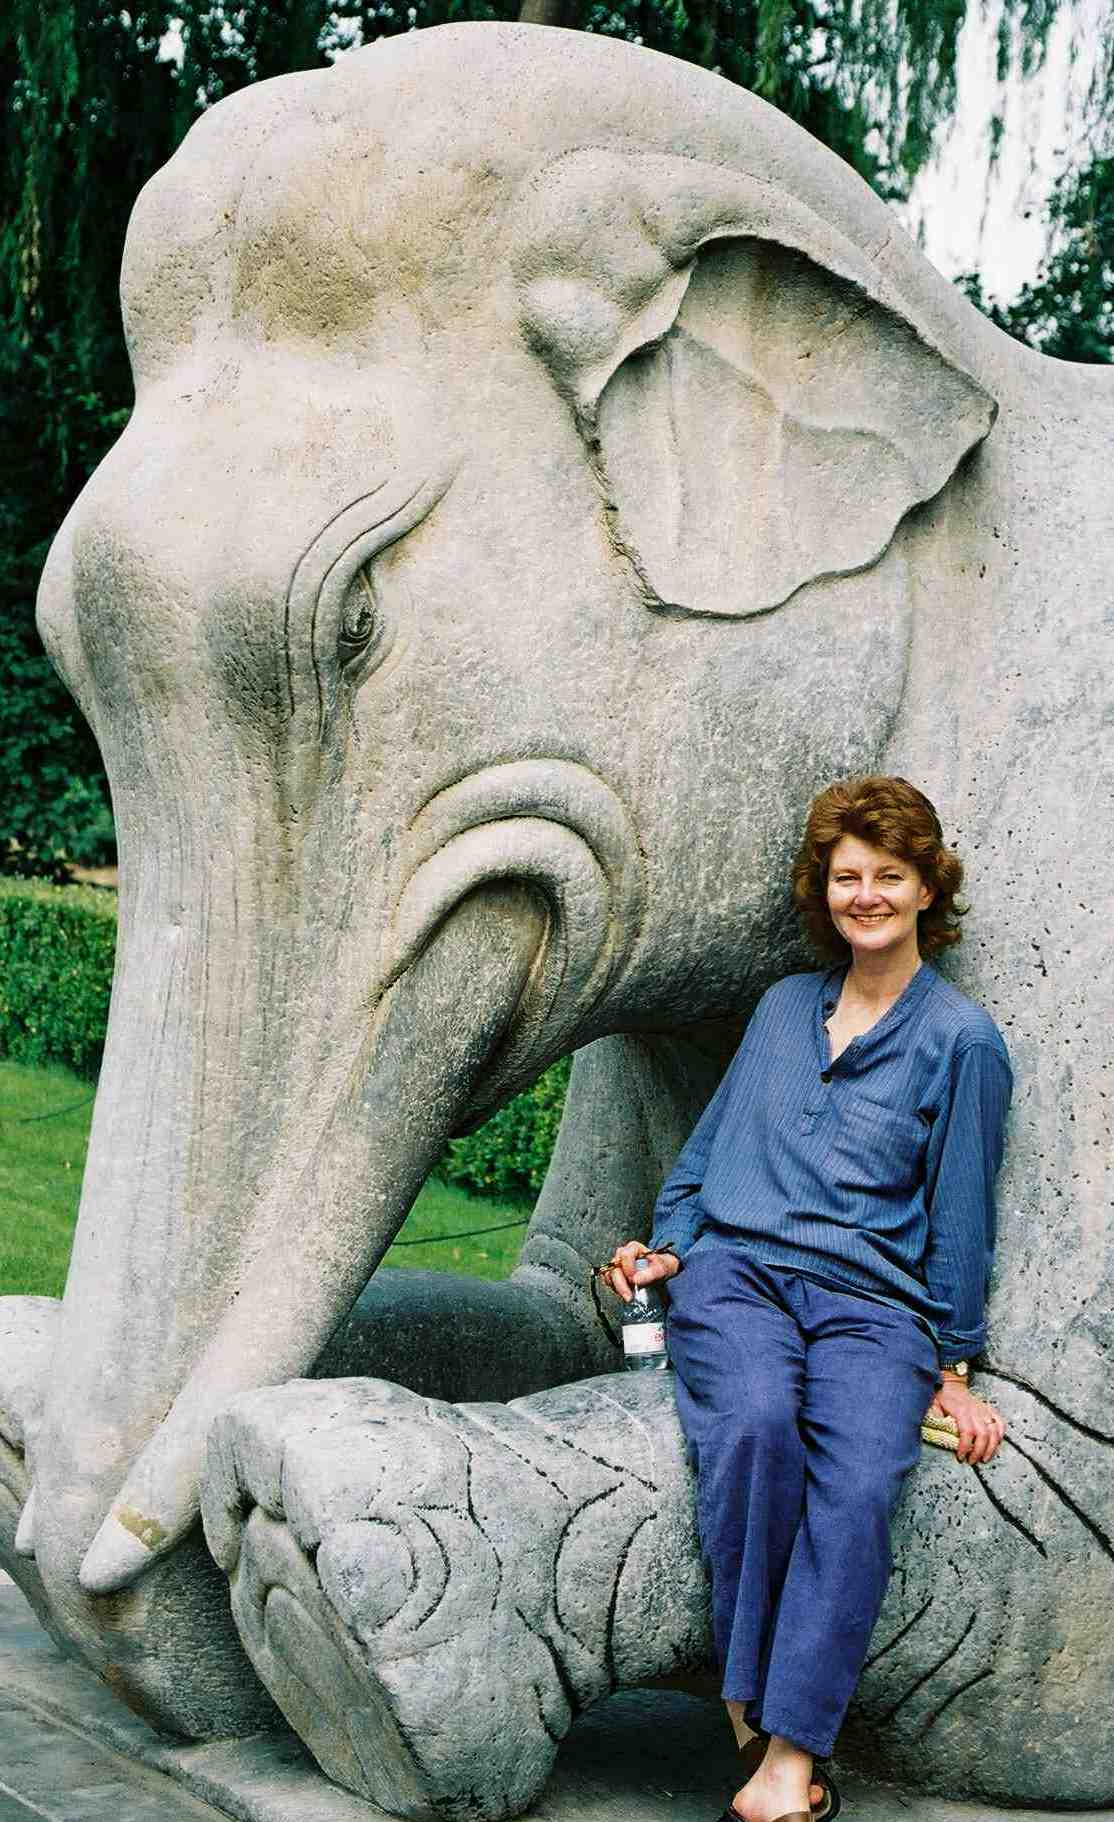 Tina Brady @ China 2003